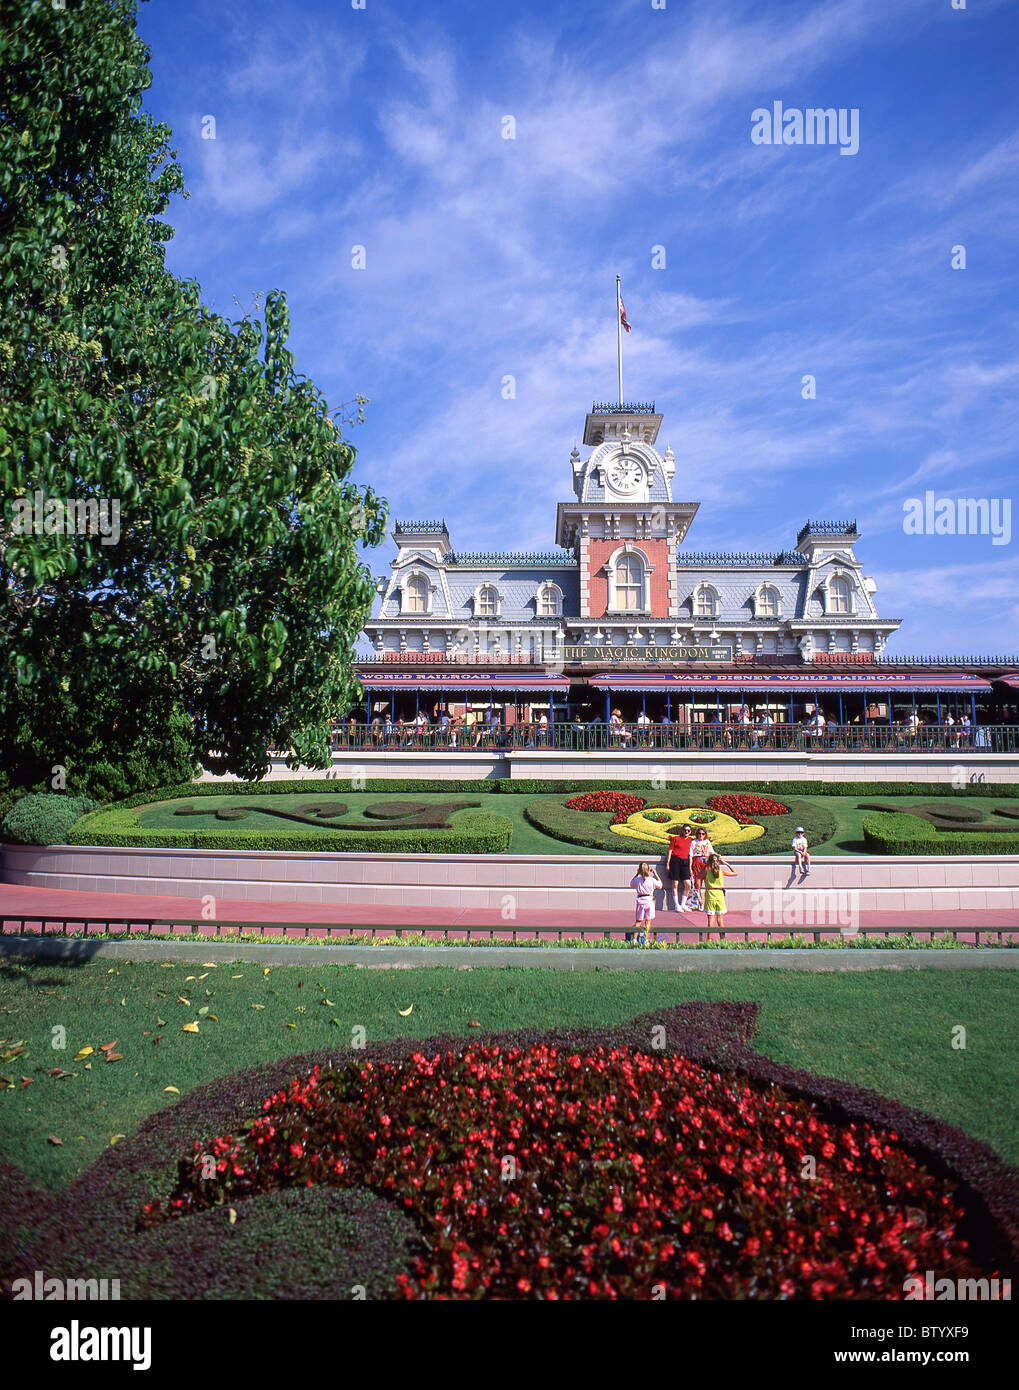 Ingresso al parco di Walt Disney World, a Orlando, Florida, Stati Uniti d'America Foto Stock